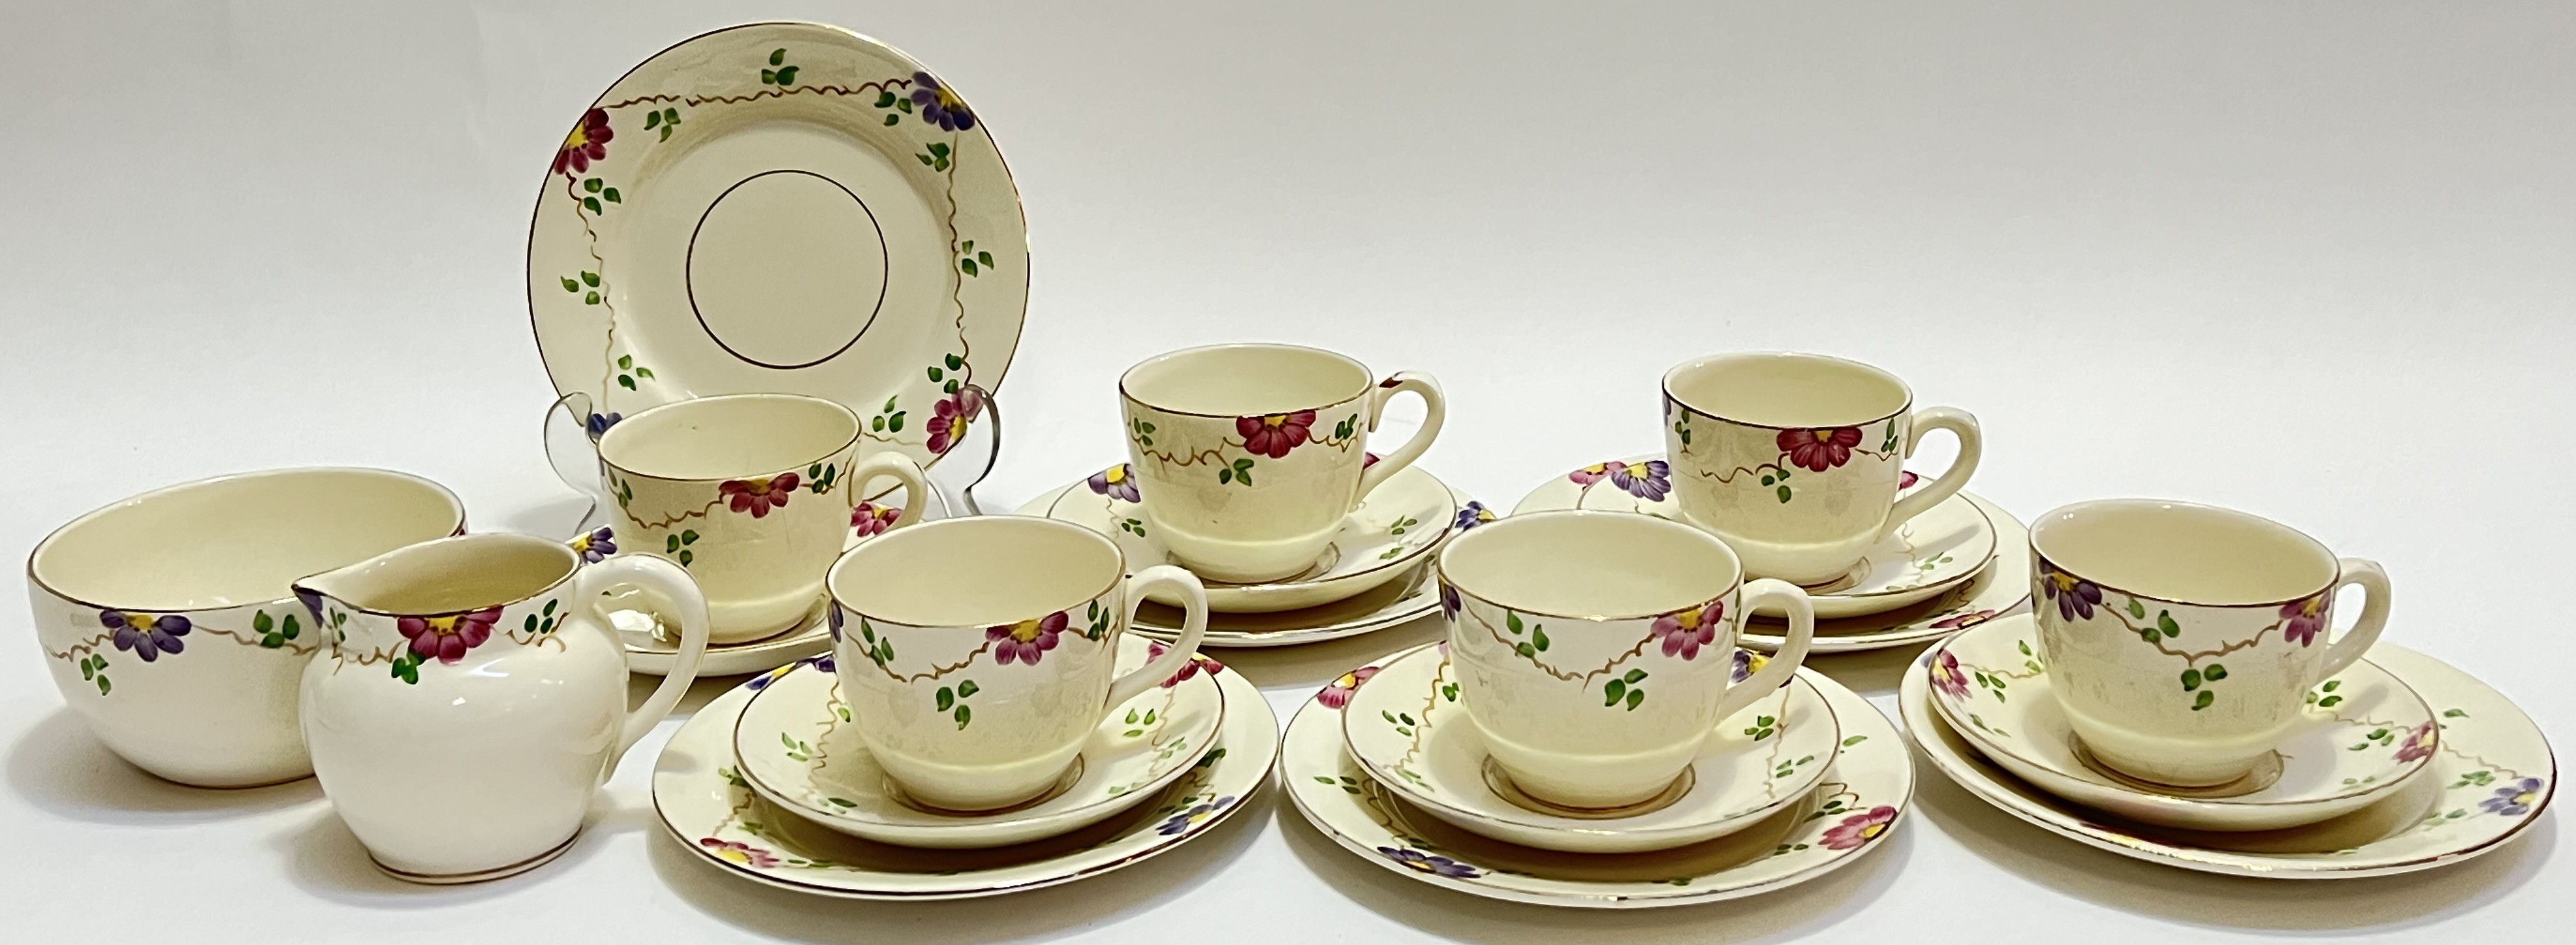 A George Jones & Sons part tea service with hand painted floral design, comprising six tea plates (